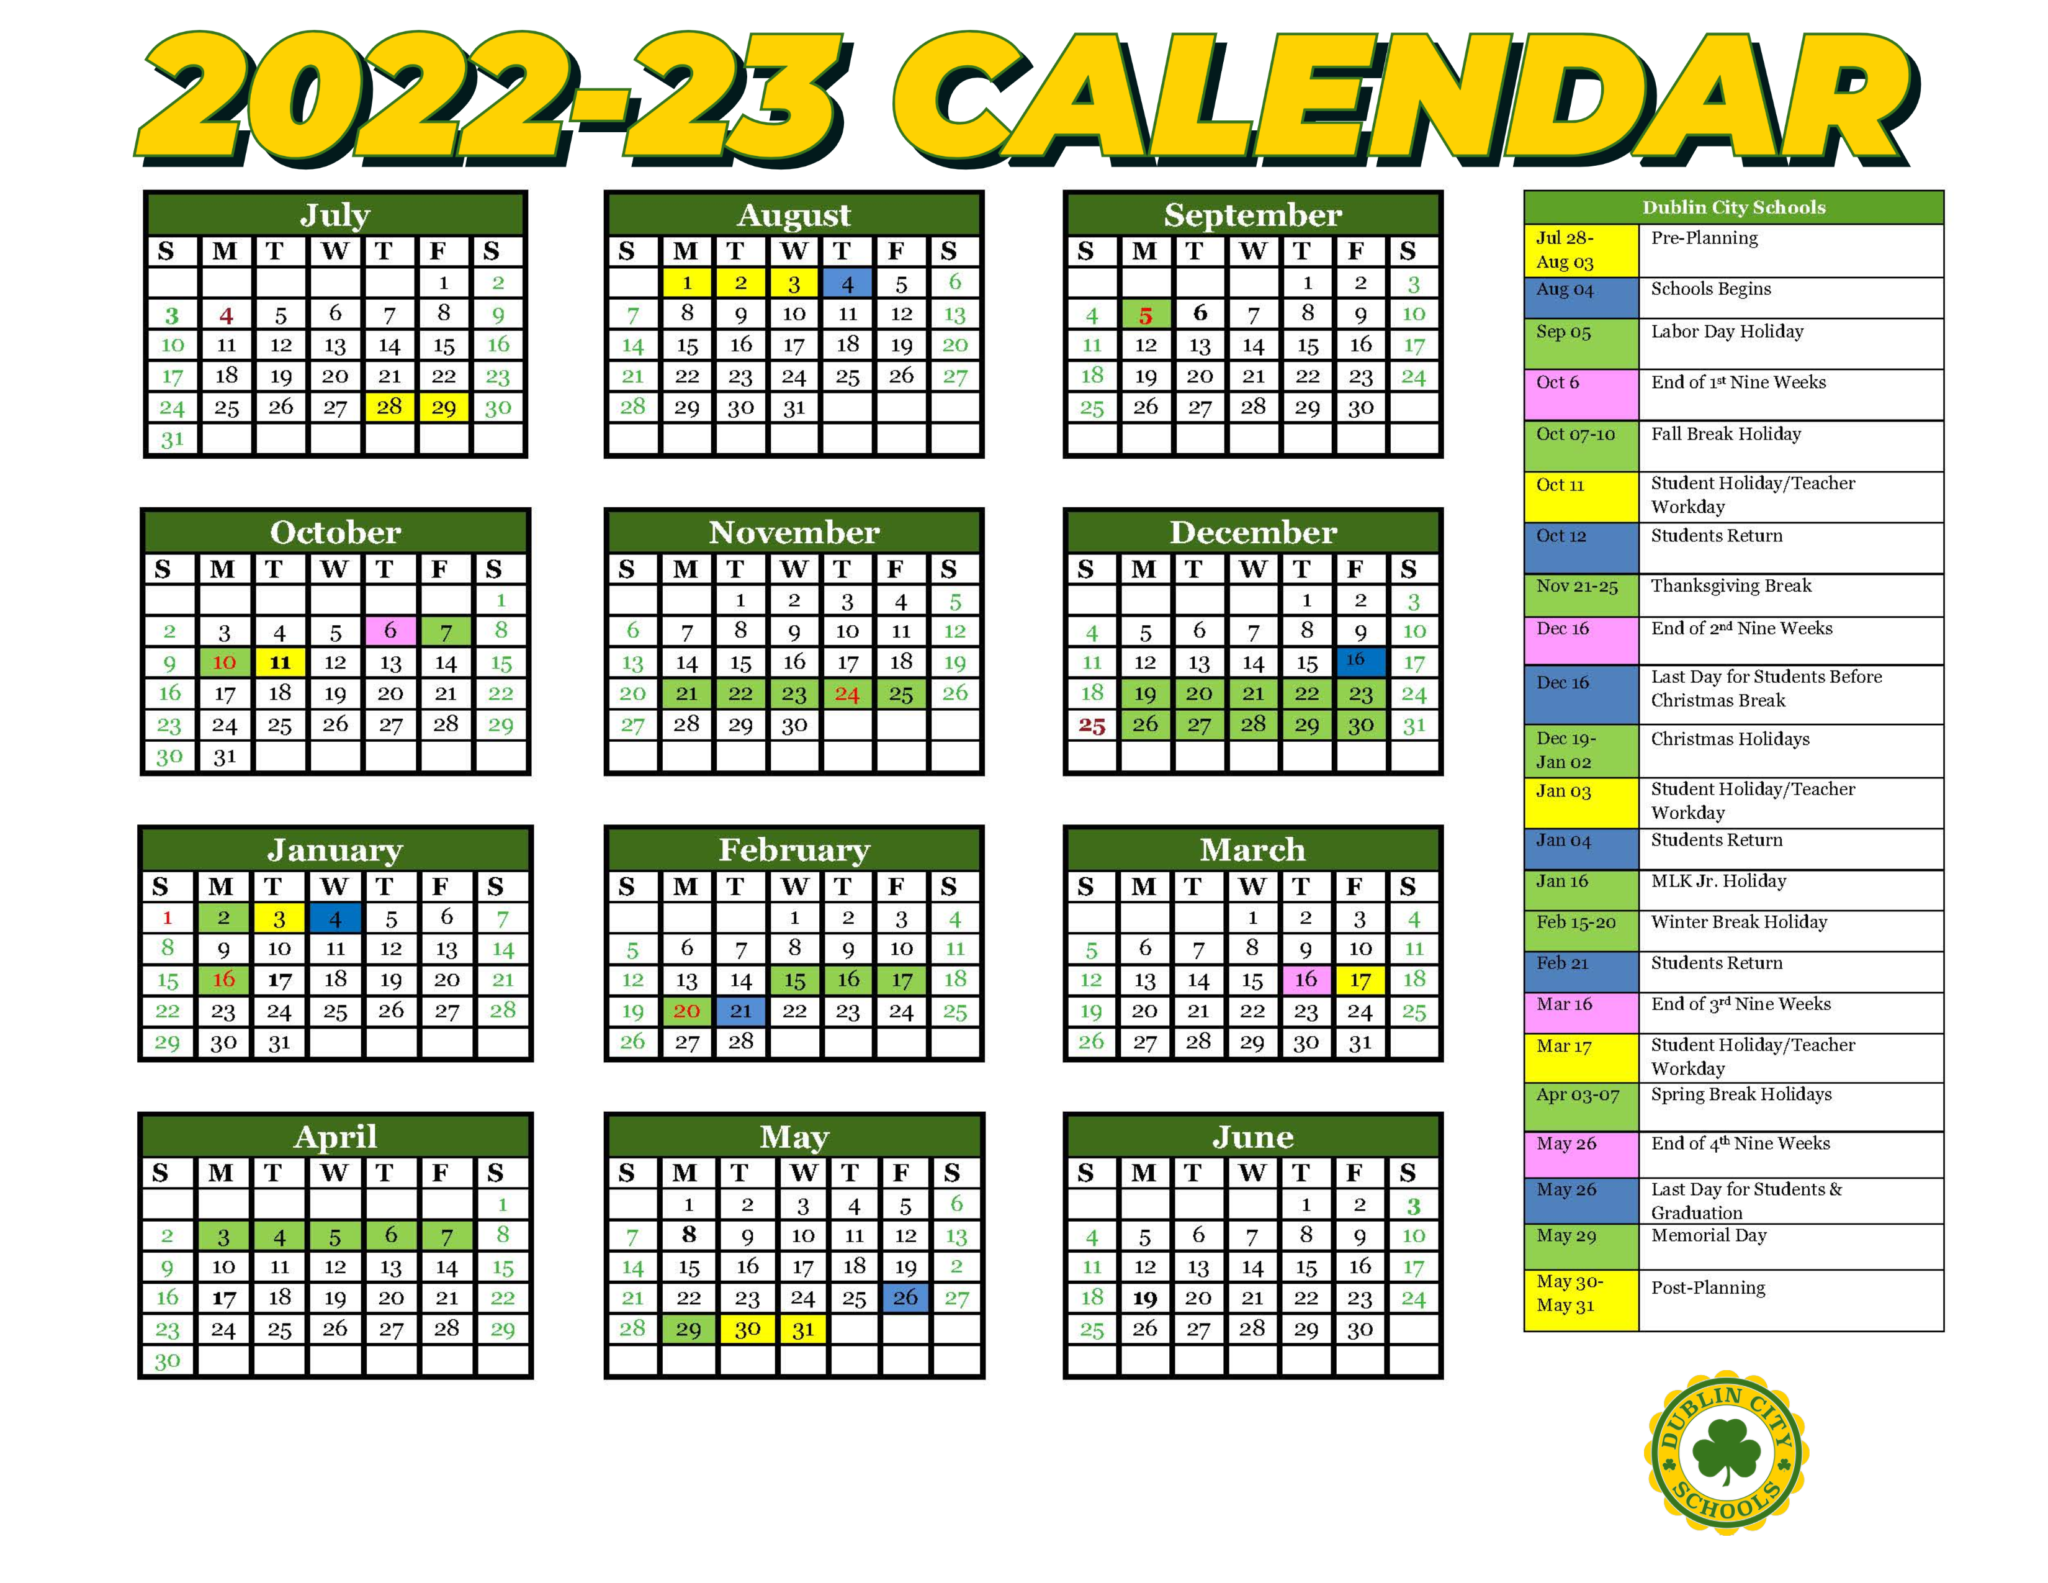 Dublin City Schools Calendar Holidays 20222023 in PDF